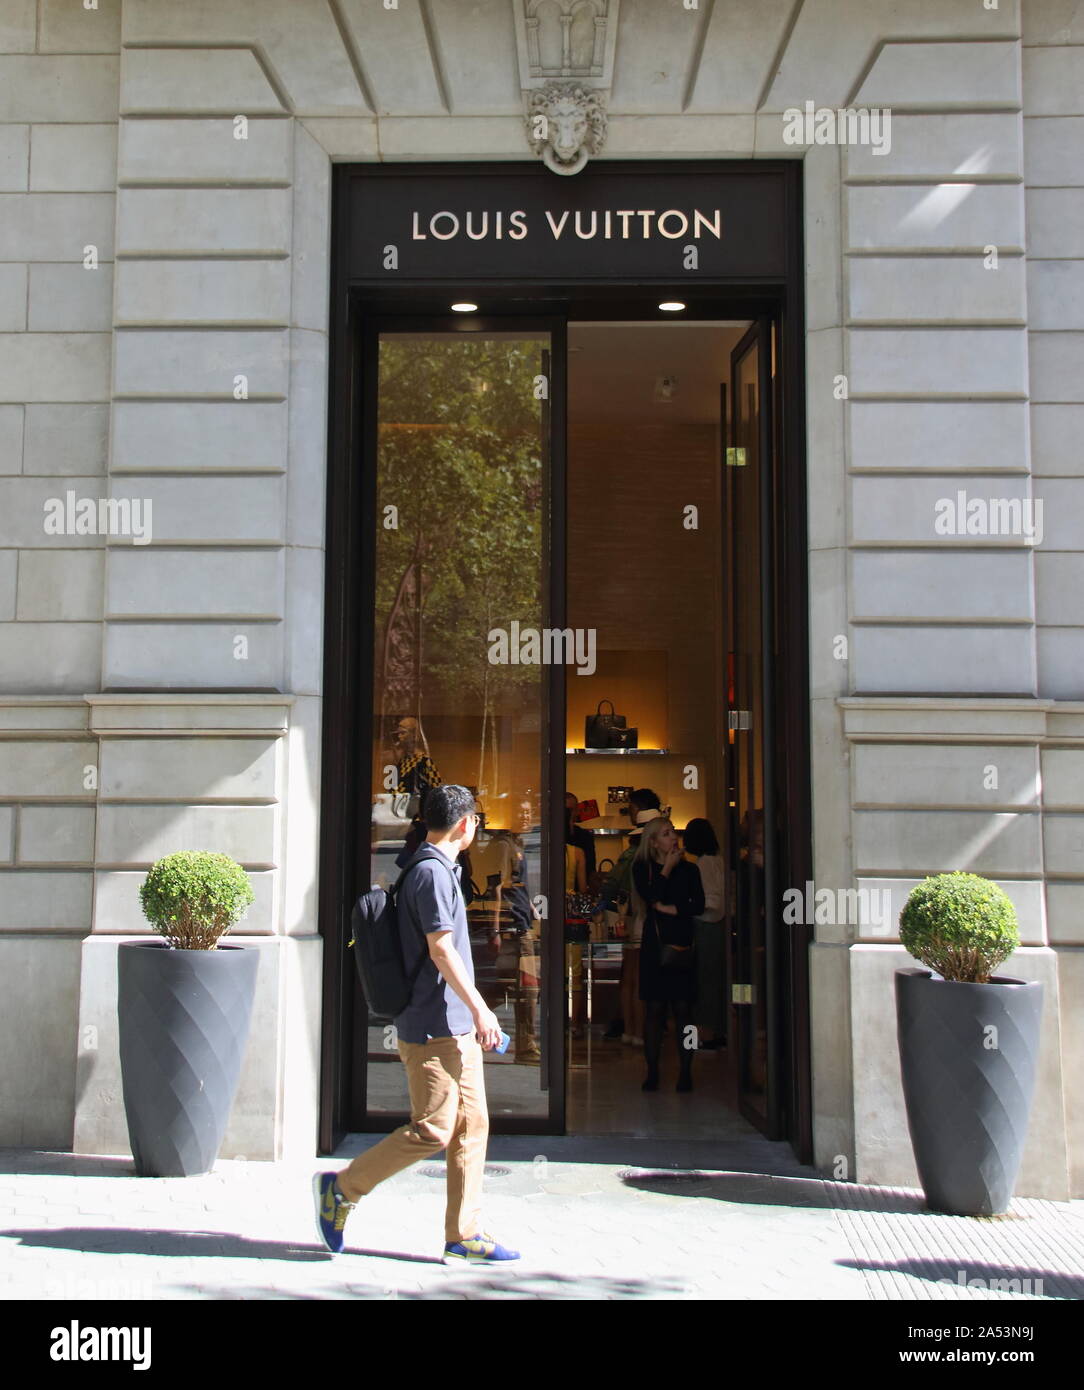 Louis Vuitton in Barcelona - Glam & Glitter